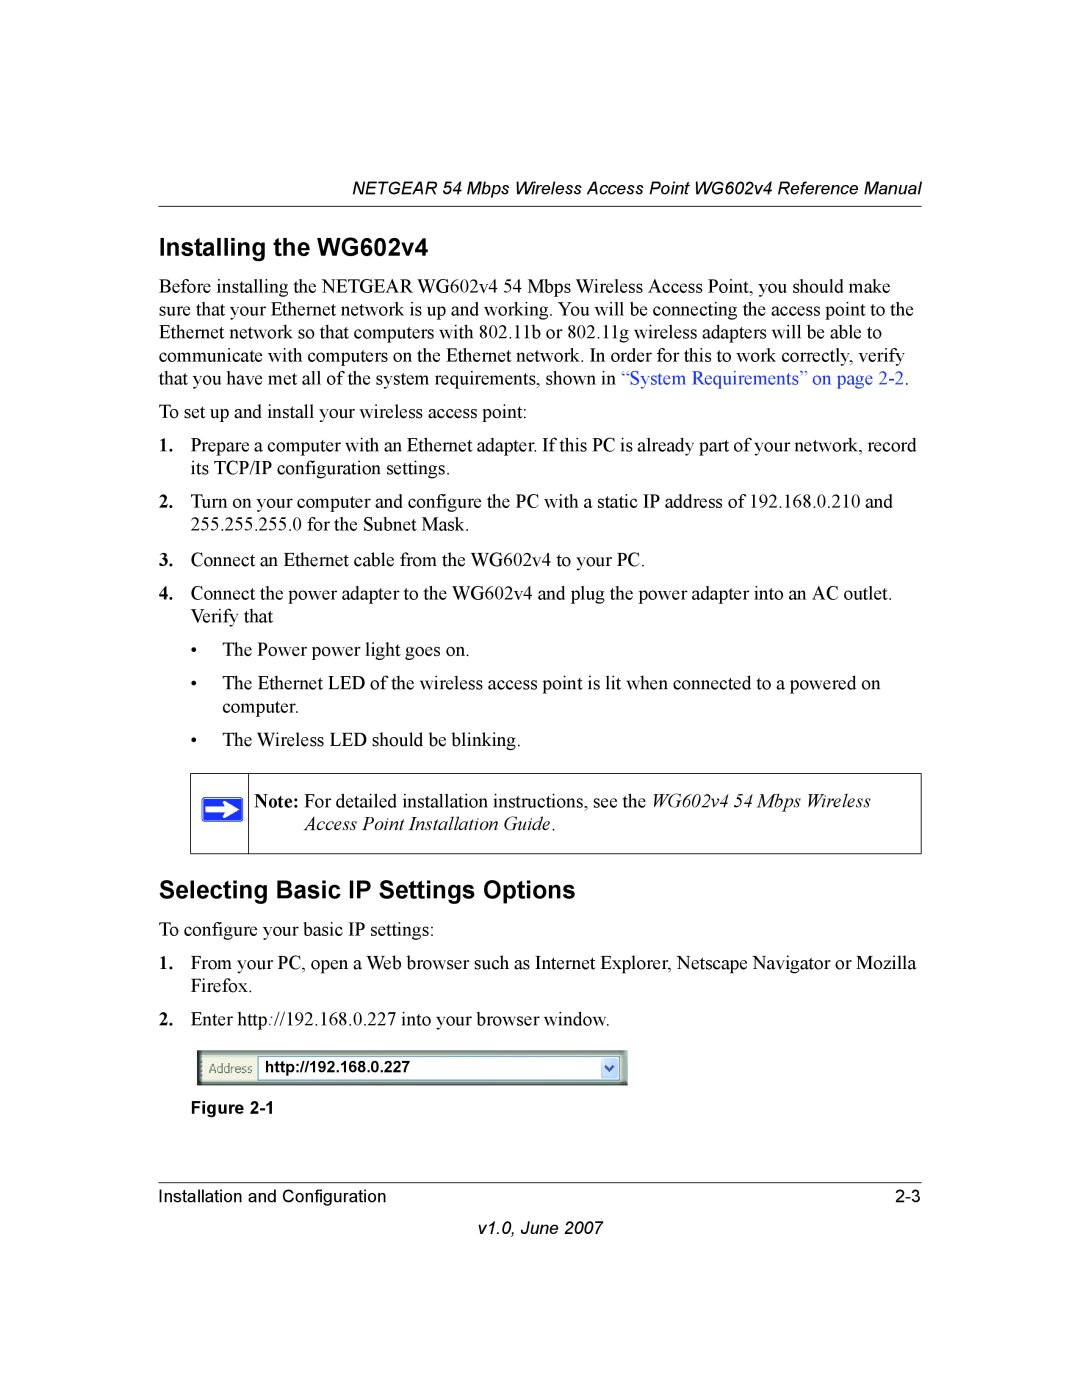 NETGEAR WG602V4 manual Installing the WG602v4, Selecting Basic IP Settings Options 